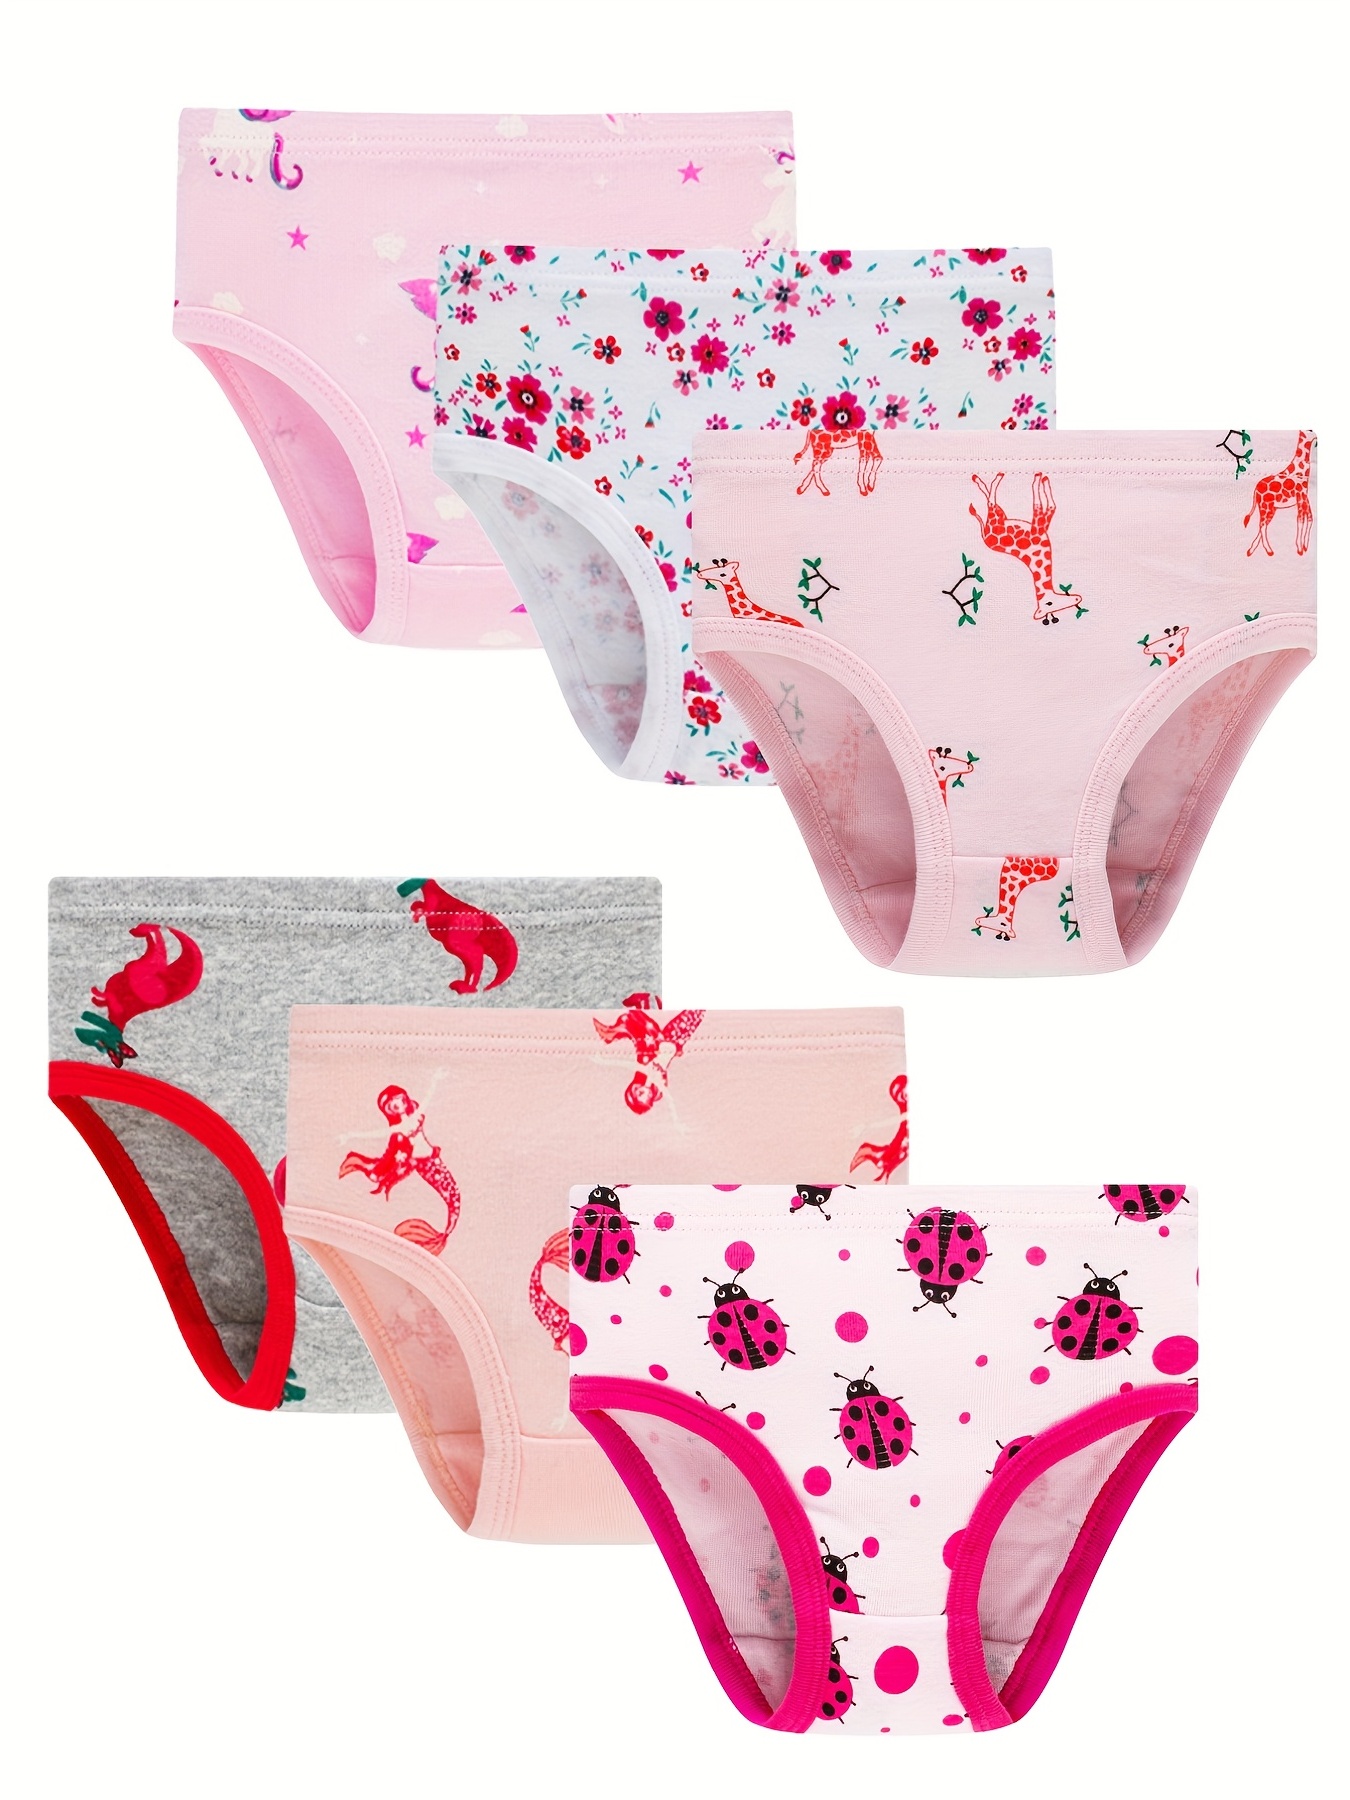  Carter's Girls' Little 7-Pack Underwear, Ladybug, 6/6X